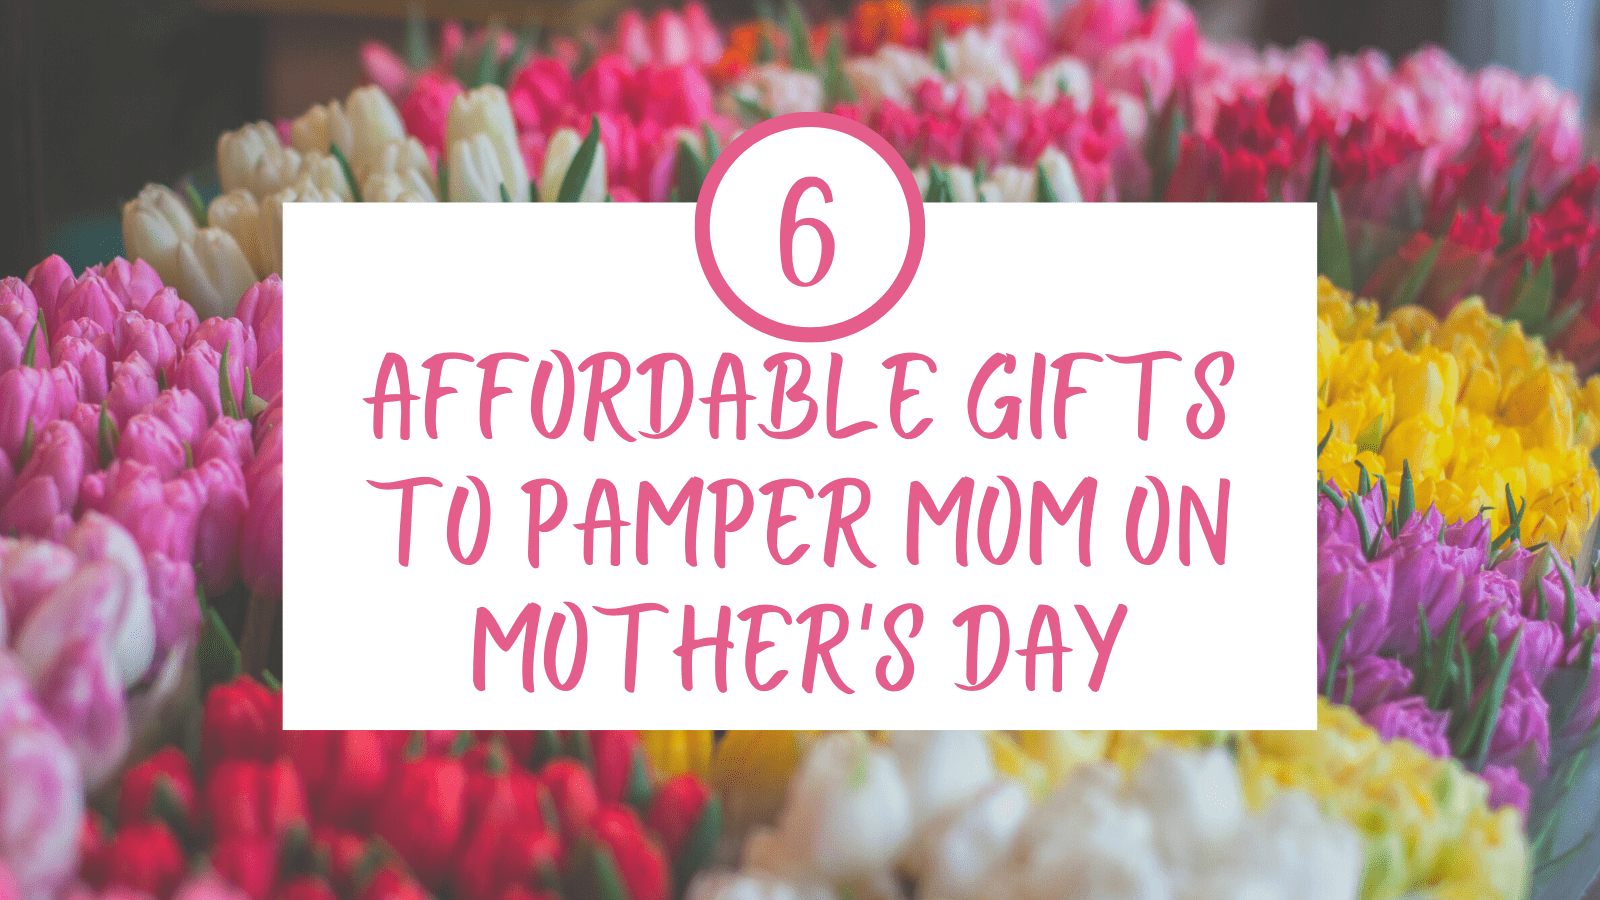 Pamper Mom On Mothers Day 50plustoday Online Magazine